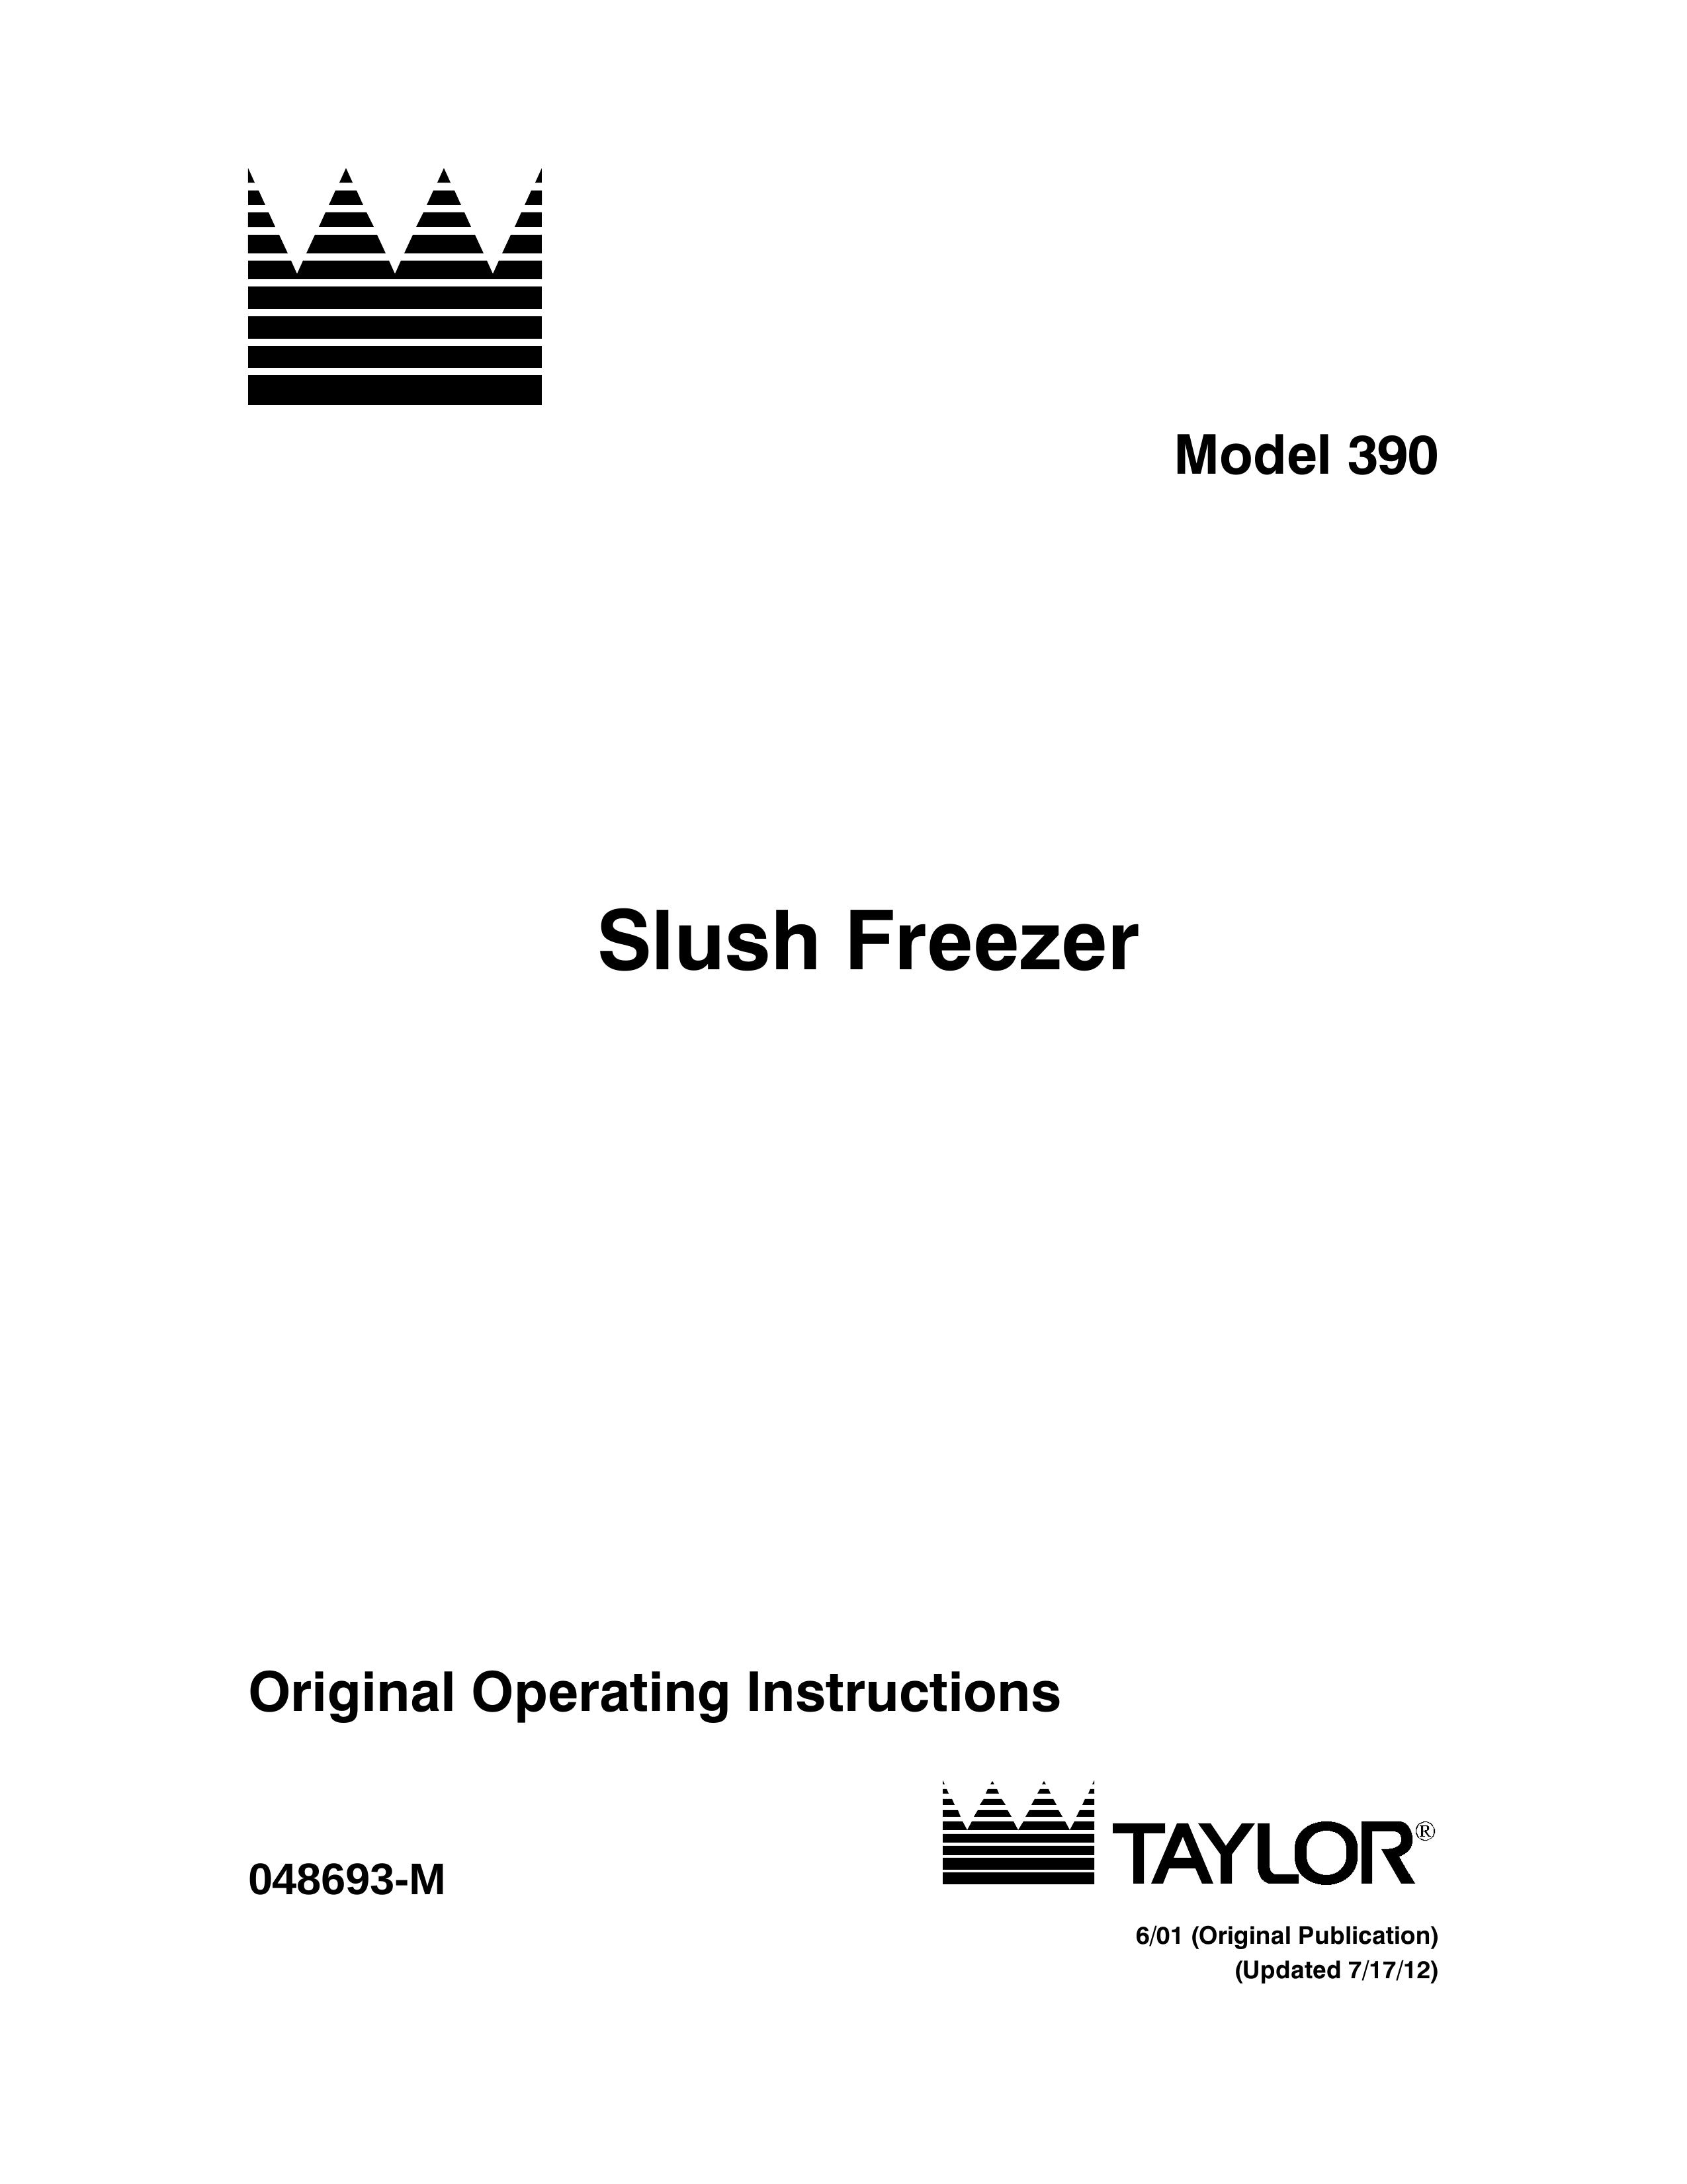 Taylor slush freezer Refrigerator User Manual